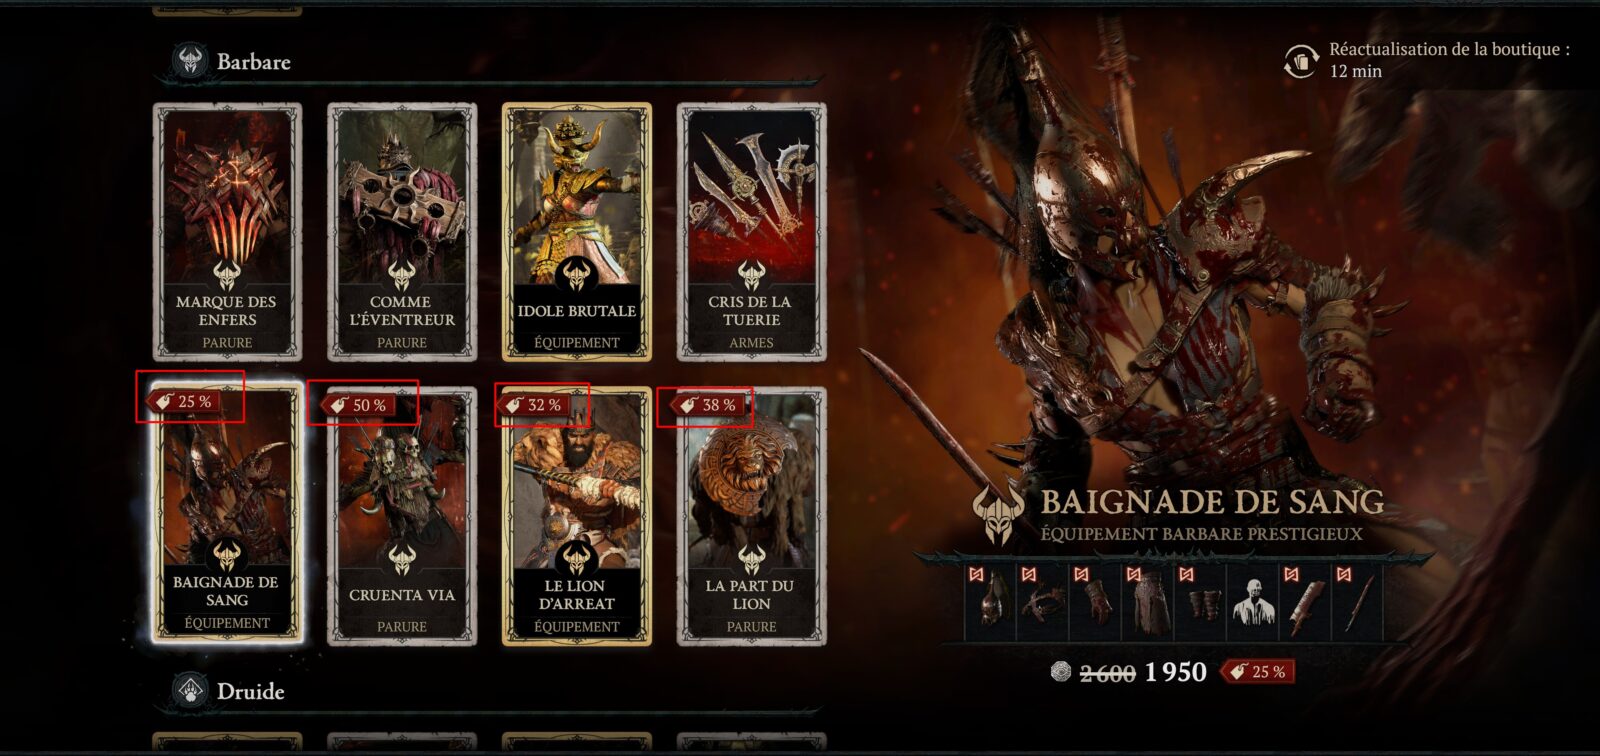 Diablo IV : Bonus d'exp et d'or, promotion Black Friday du jeu et des skins